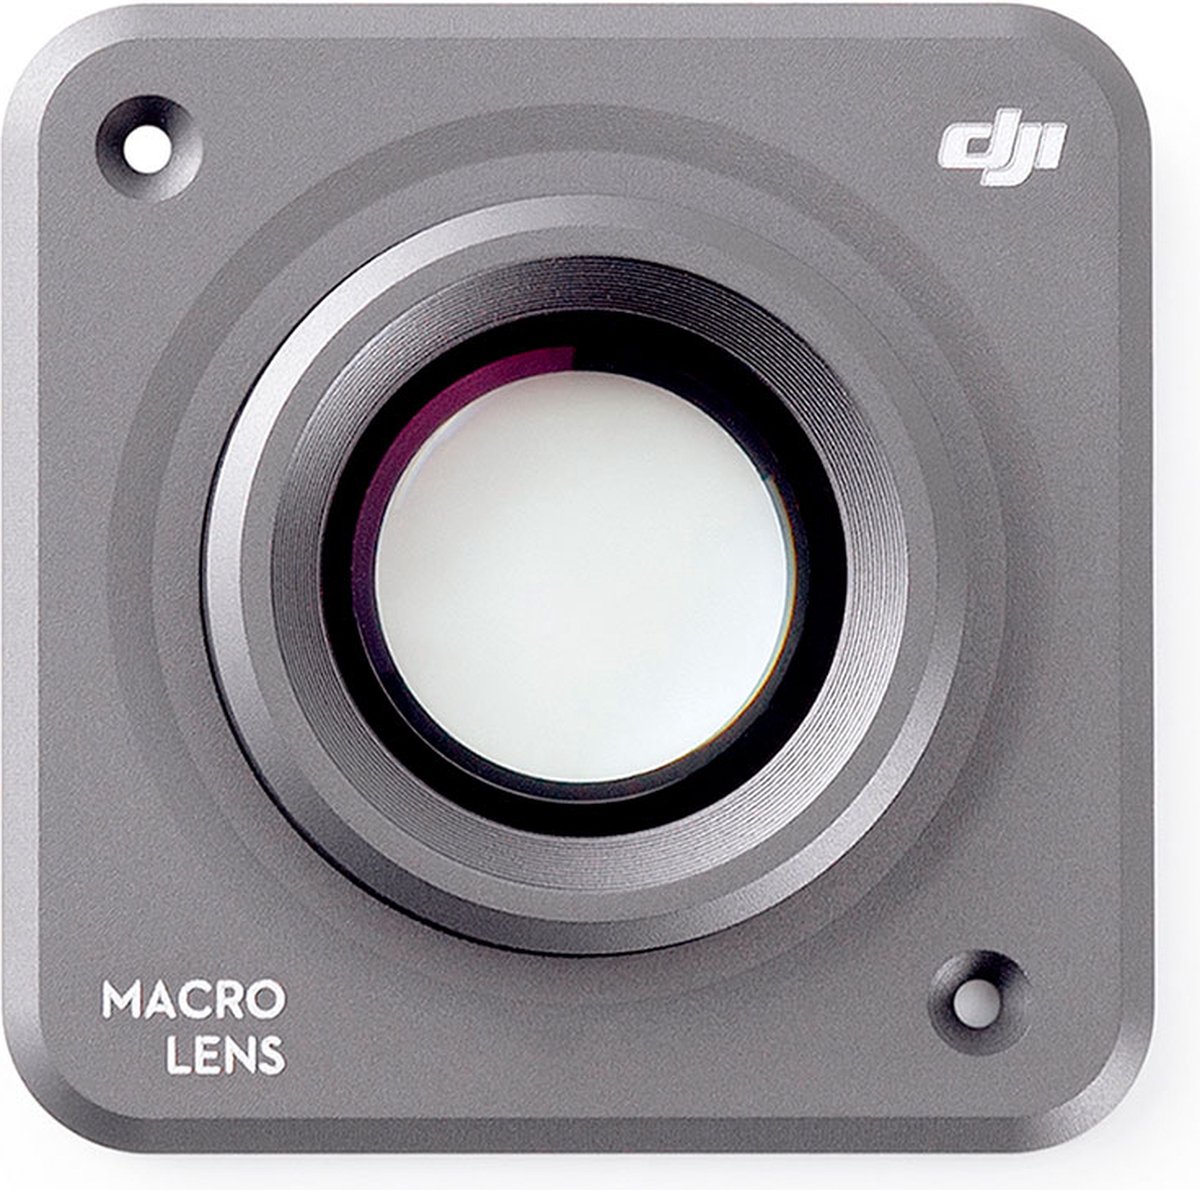 DJI Action 2 Macro Lens - DJI